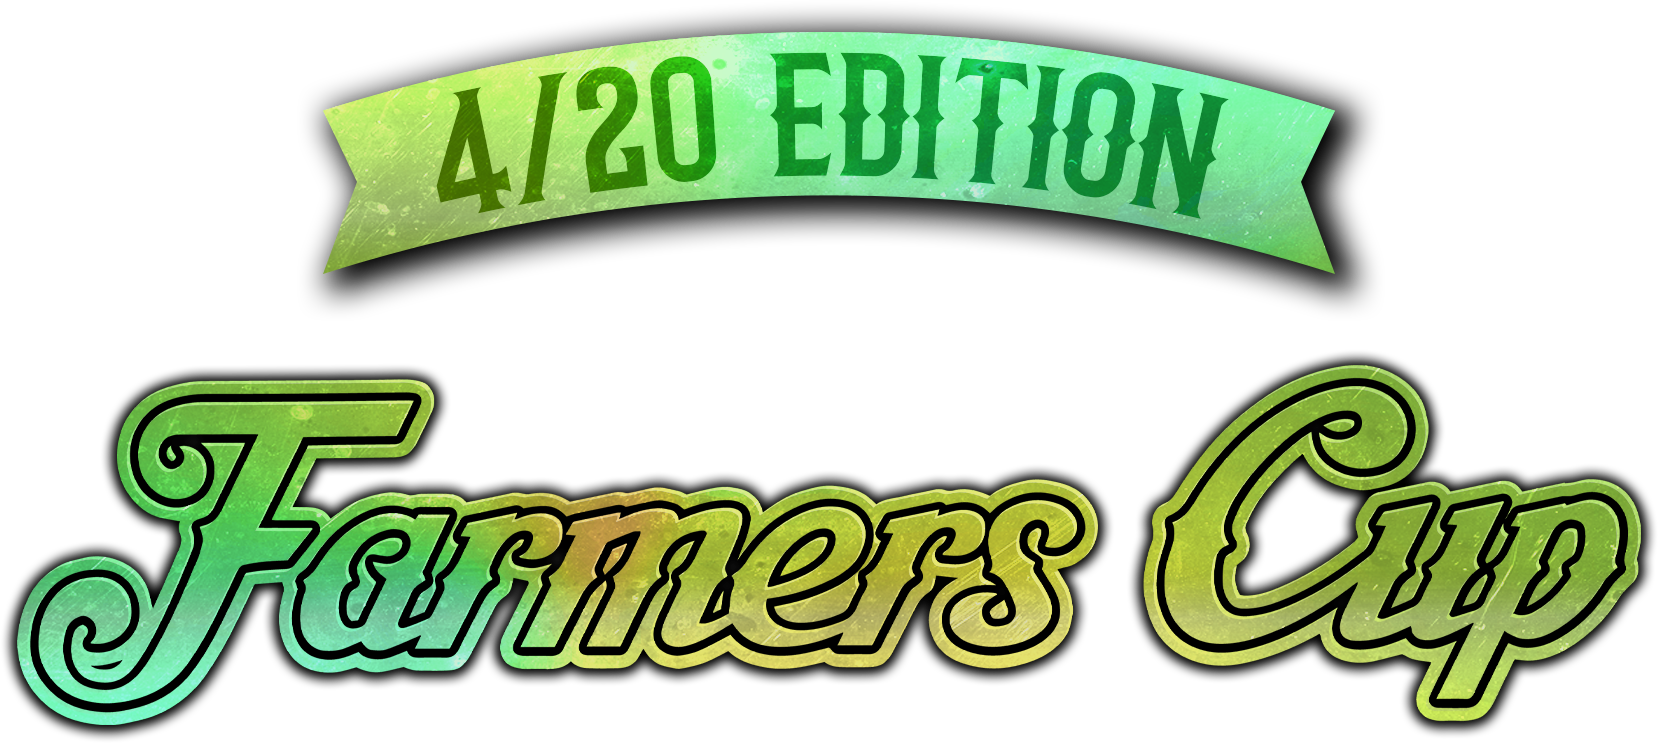 Farmers Cup 420 Edition - All Cannabis Categories Competition in San Diego, CA Balboa Park Earth Fair